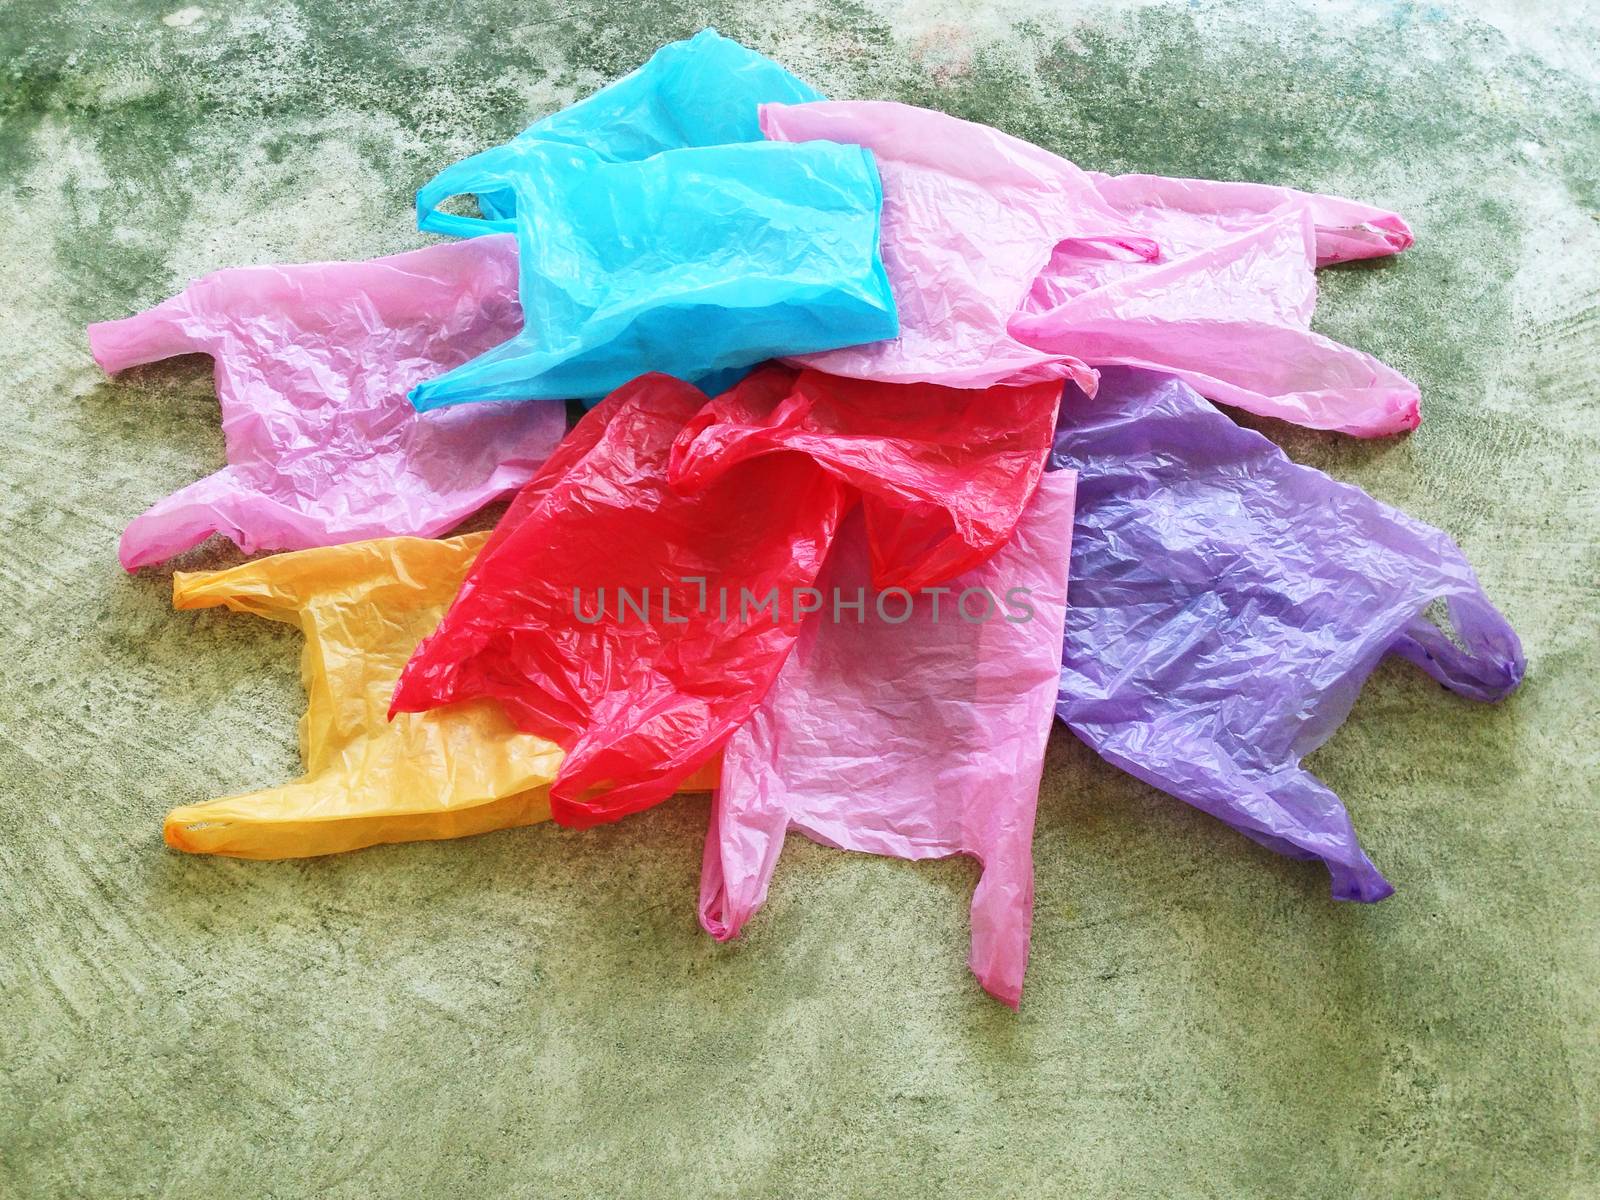 Colorful plastic bag on cement floor by Bowonpat